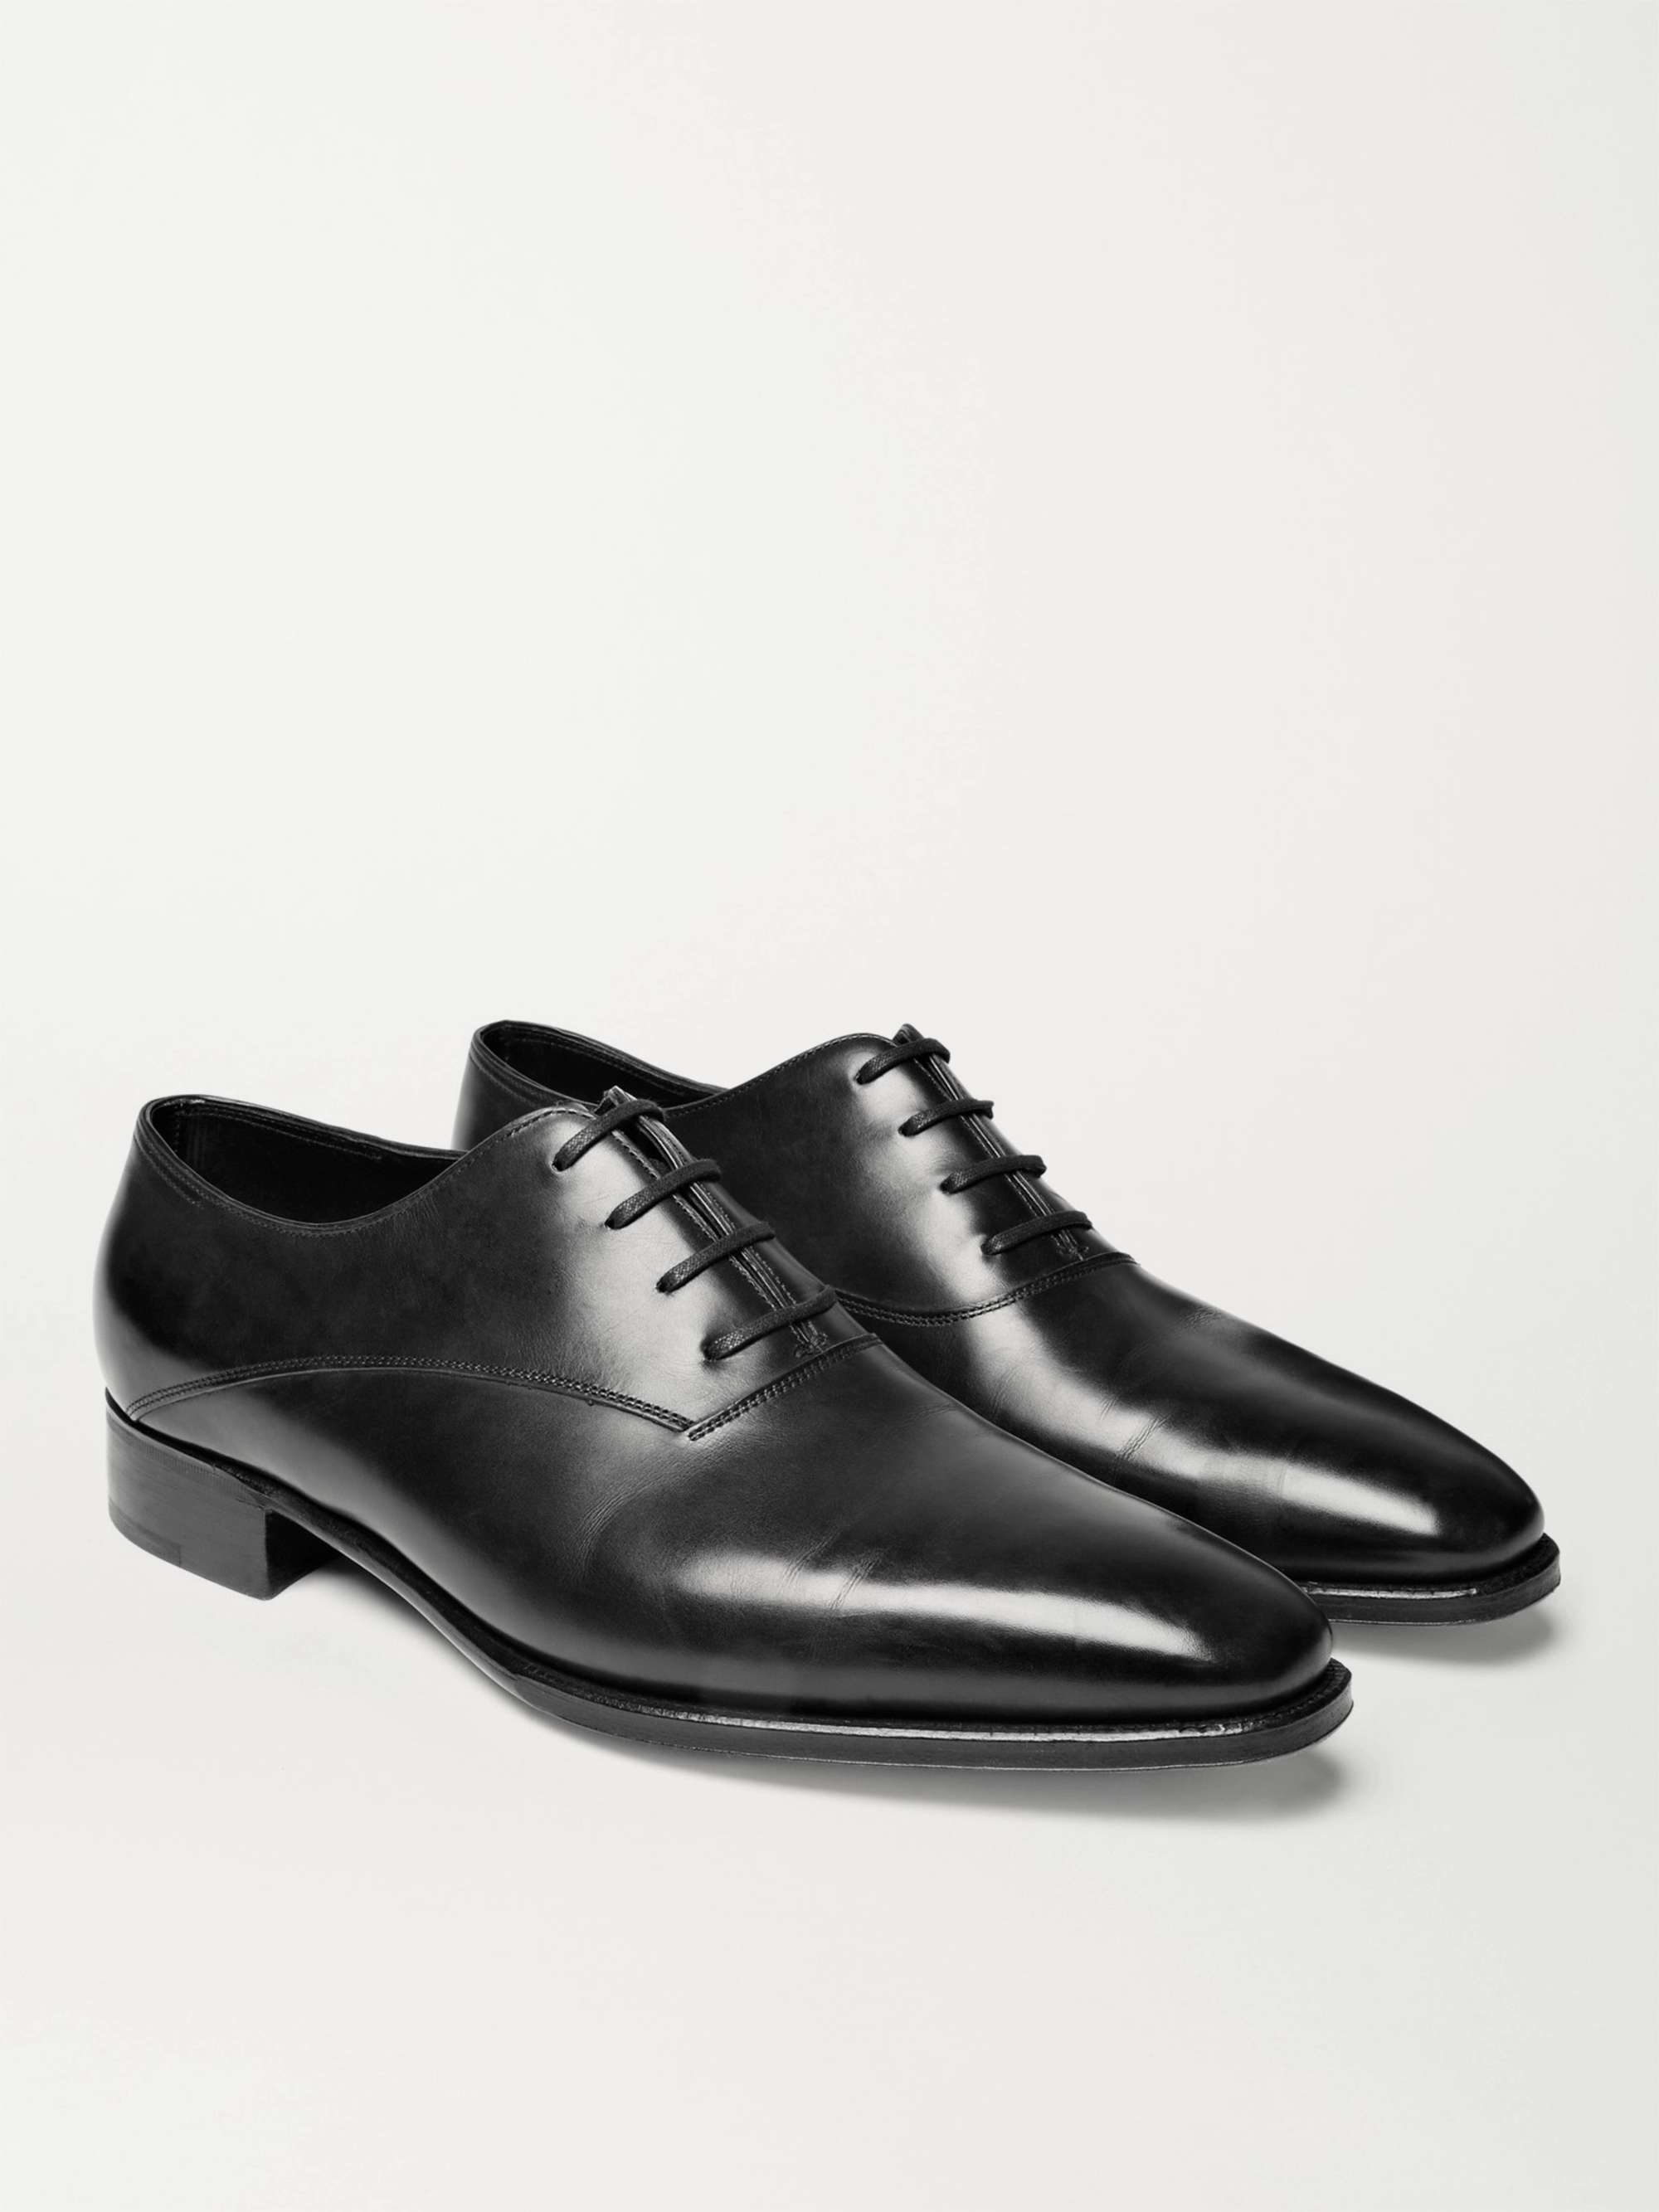 JOHN LOBB Prestige Becketts Leather Oxford Shoes